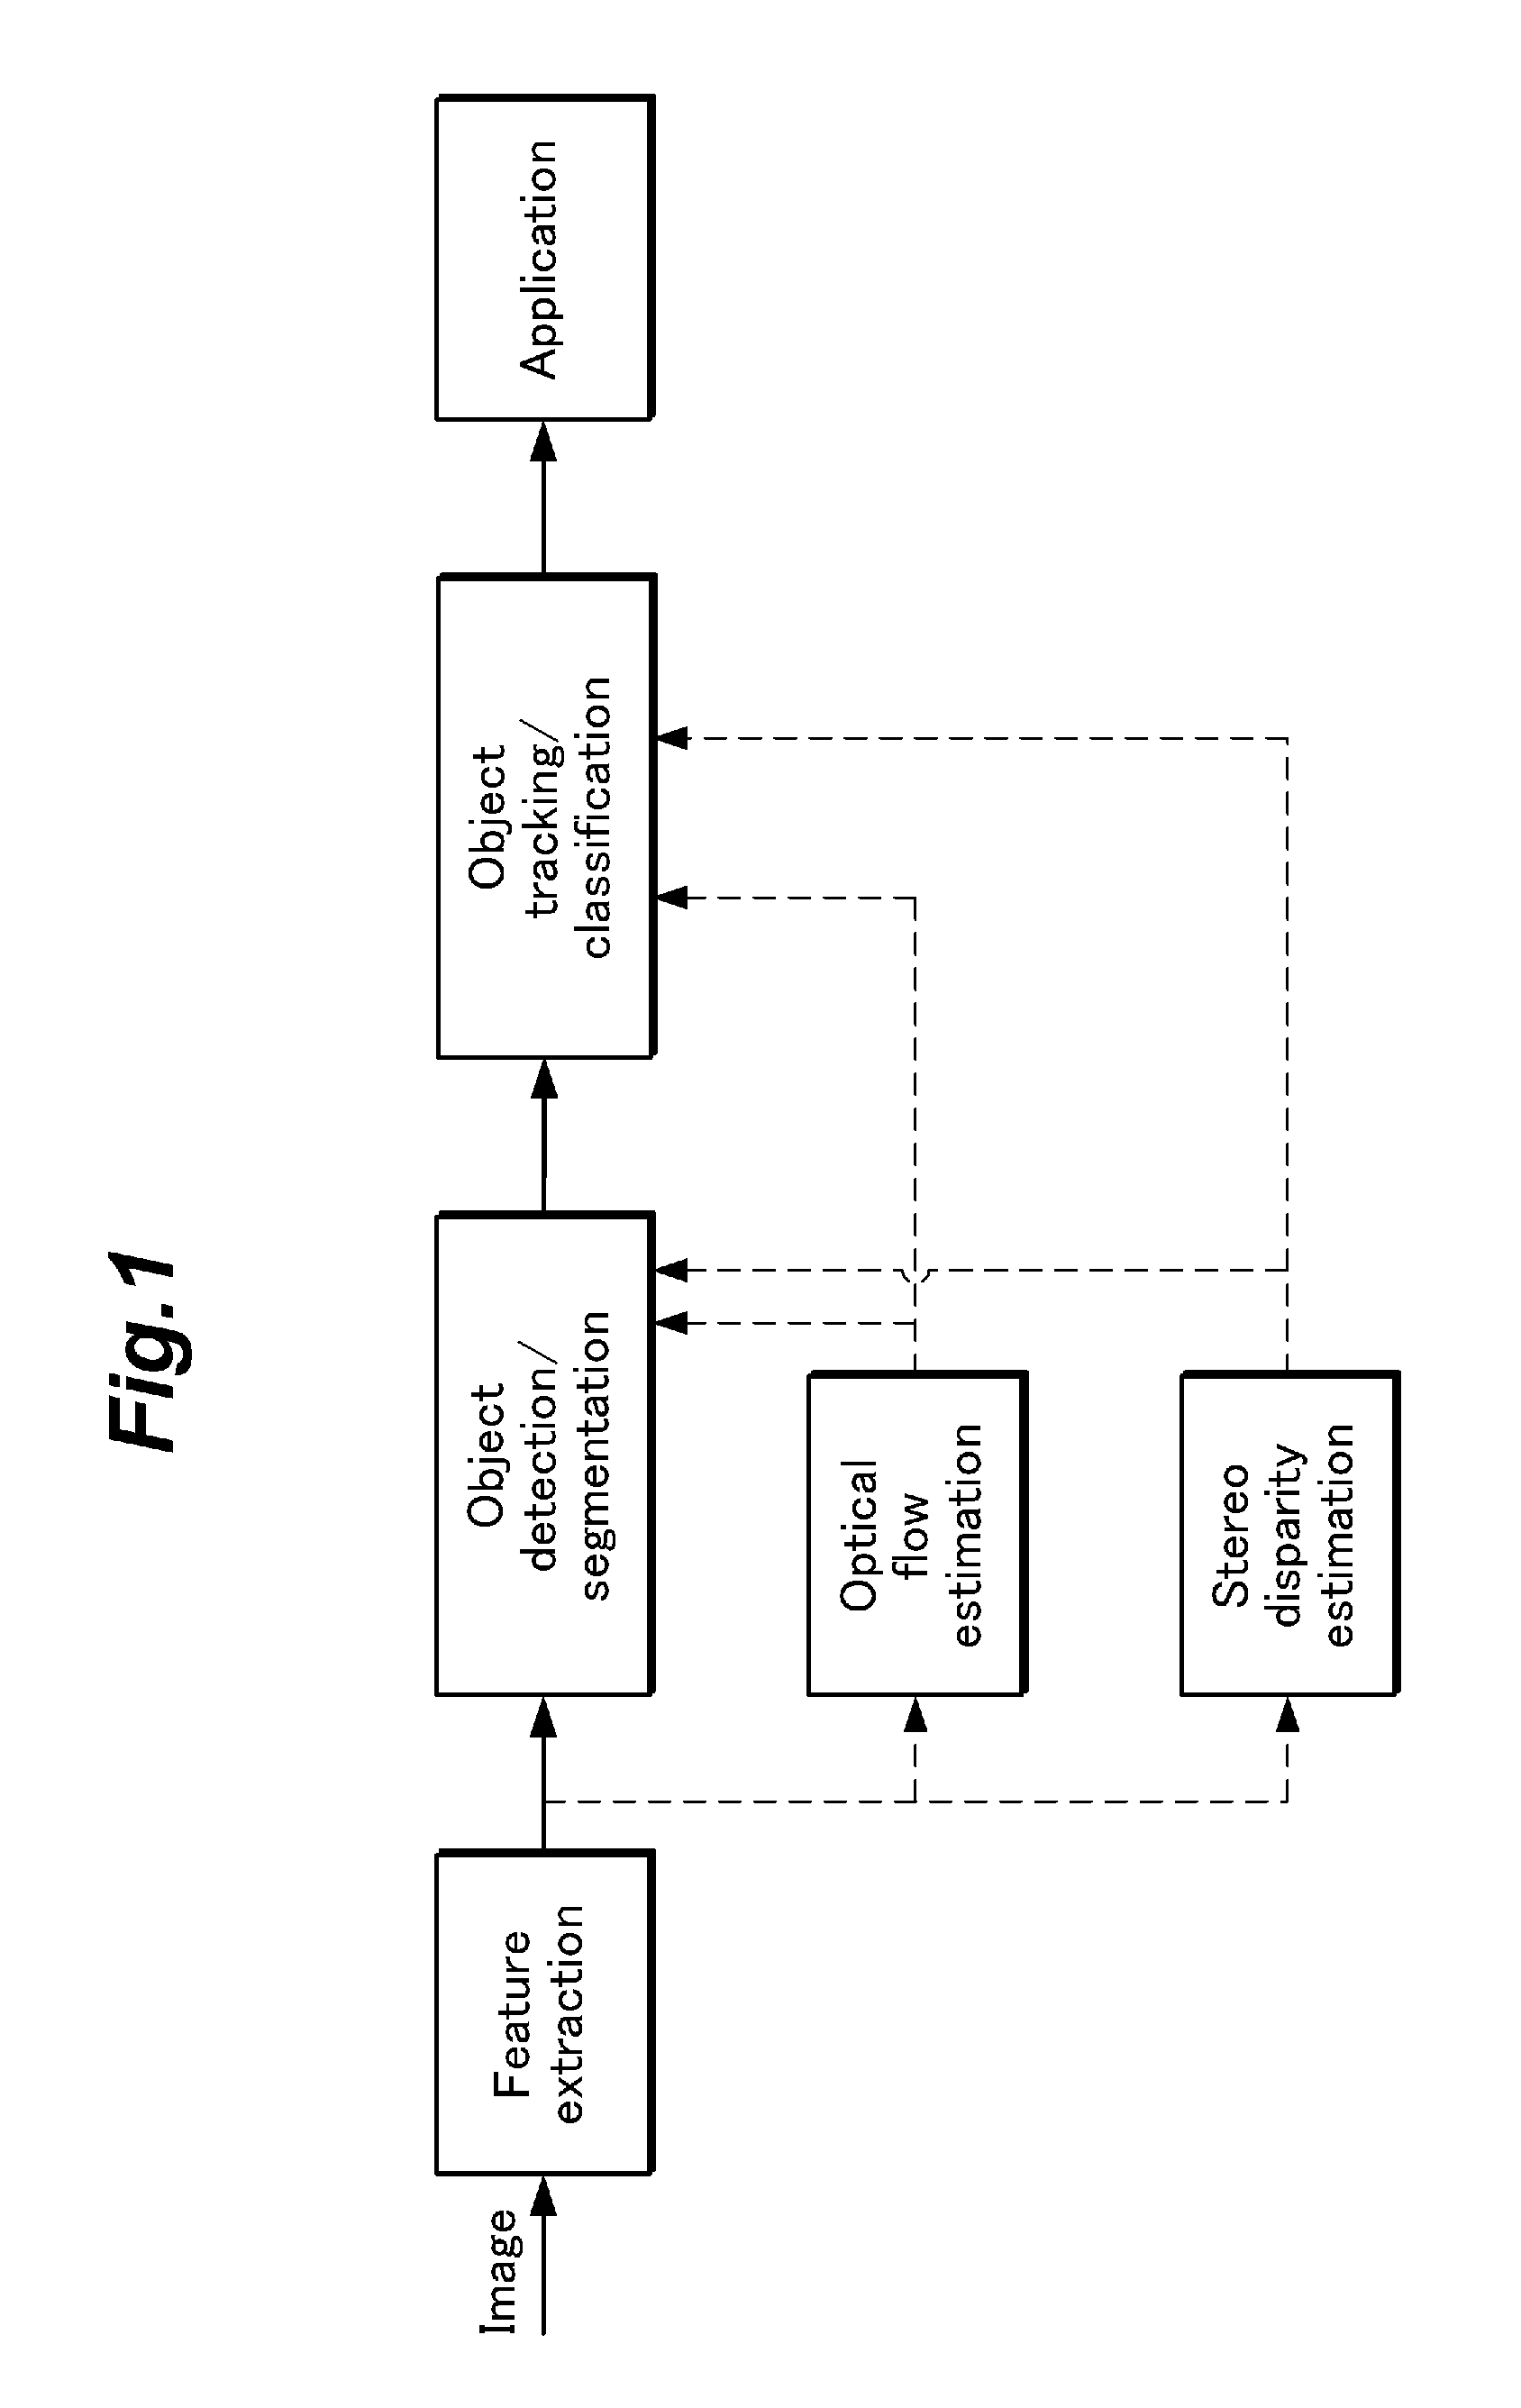 Method for image restoration in a computer vision system